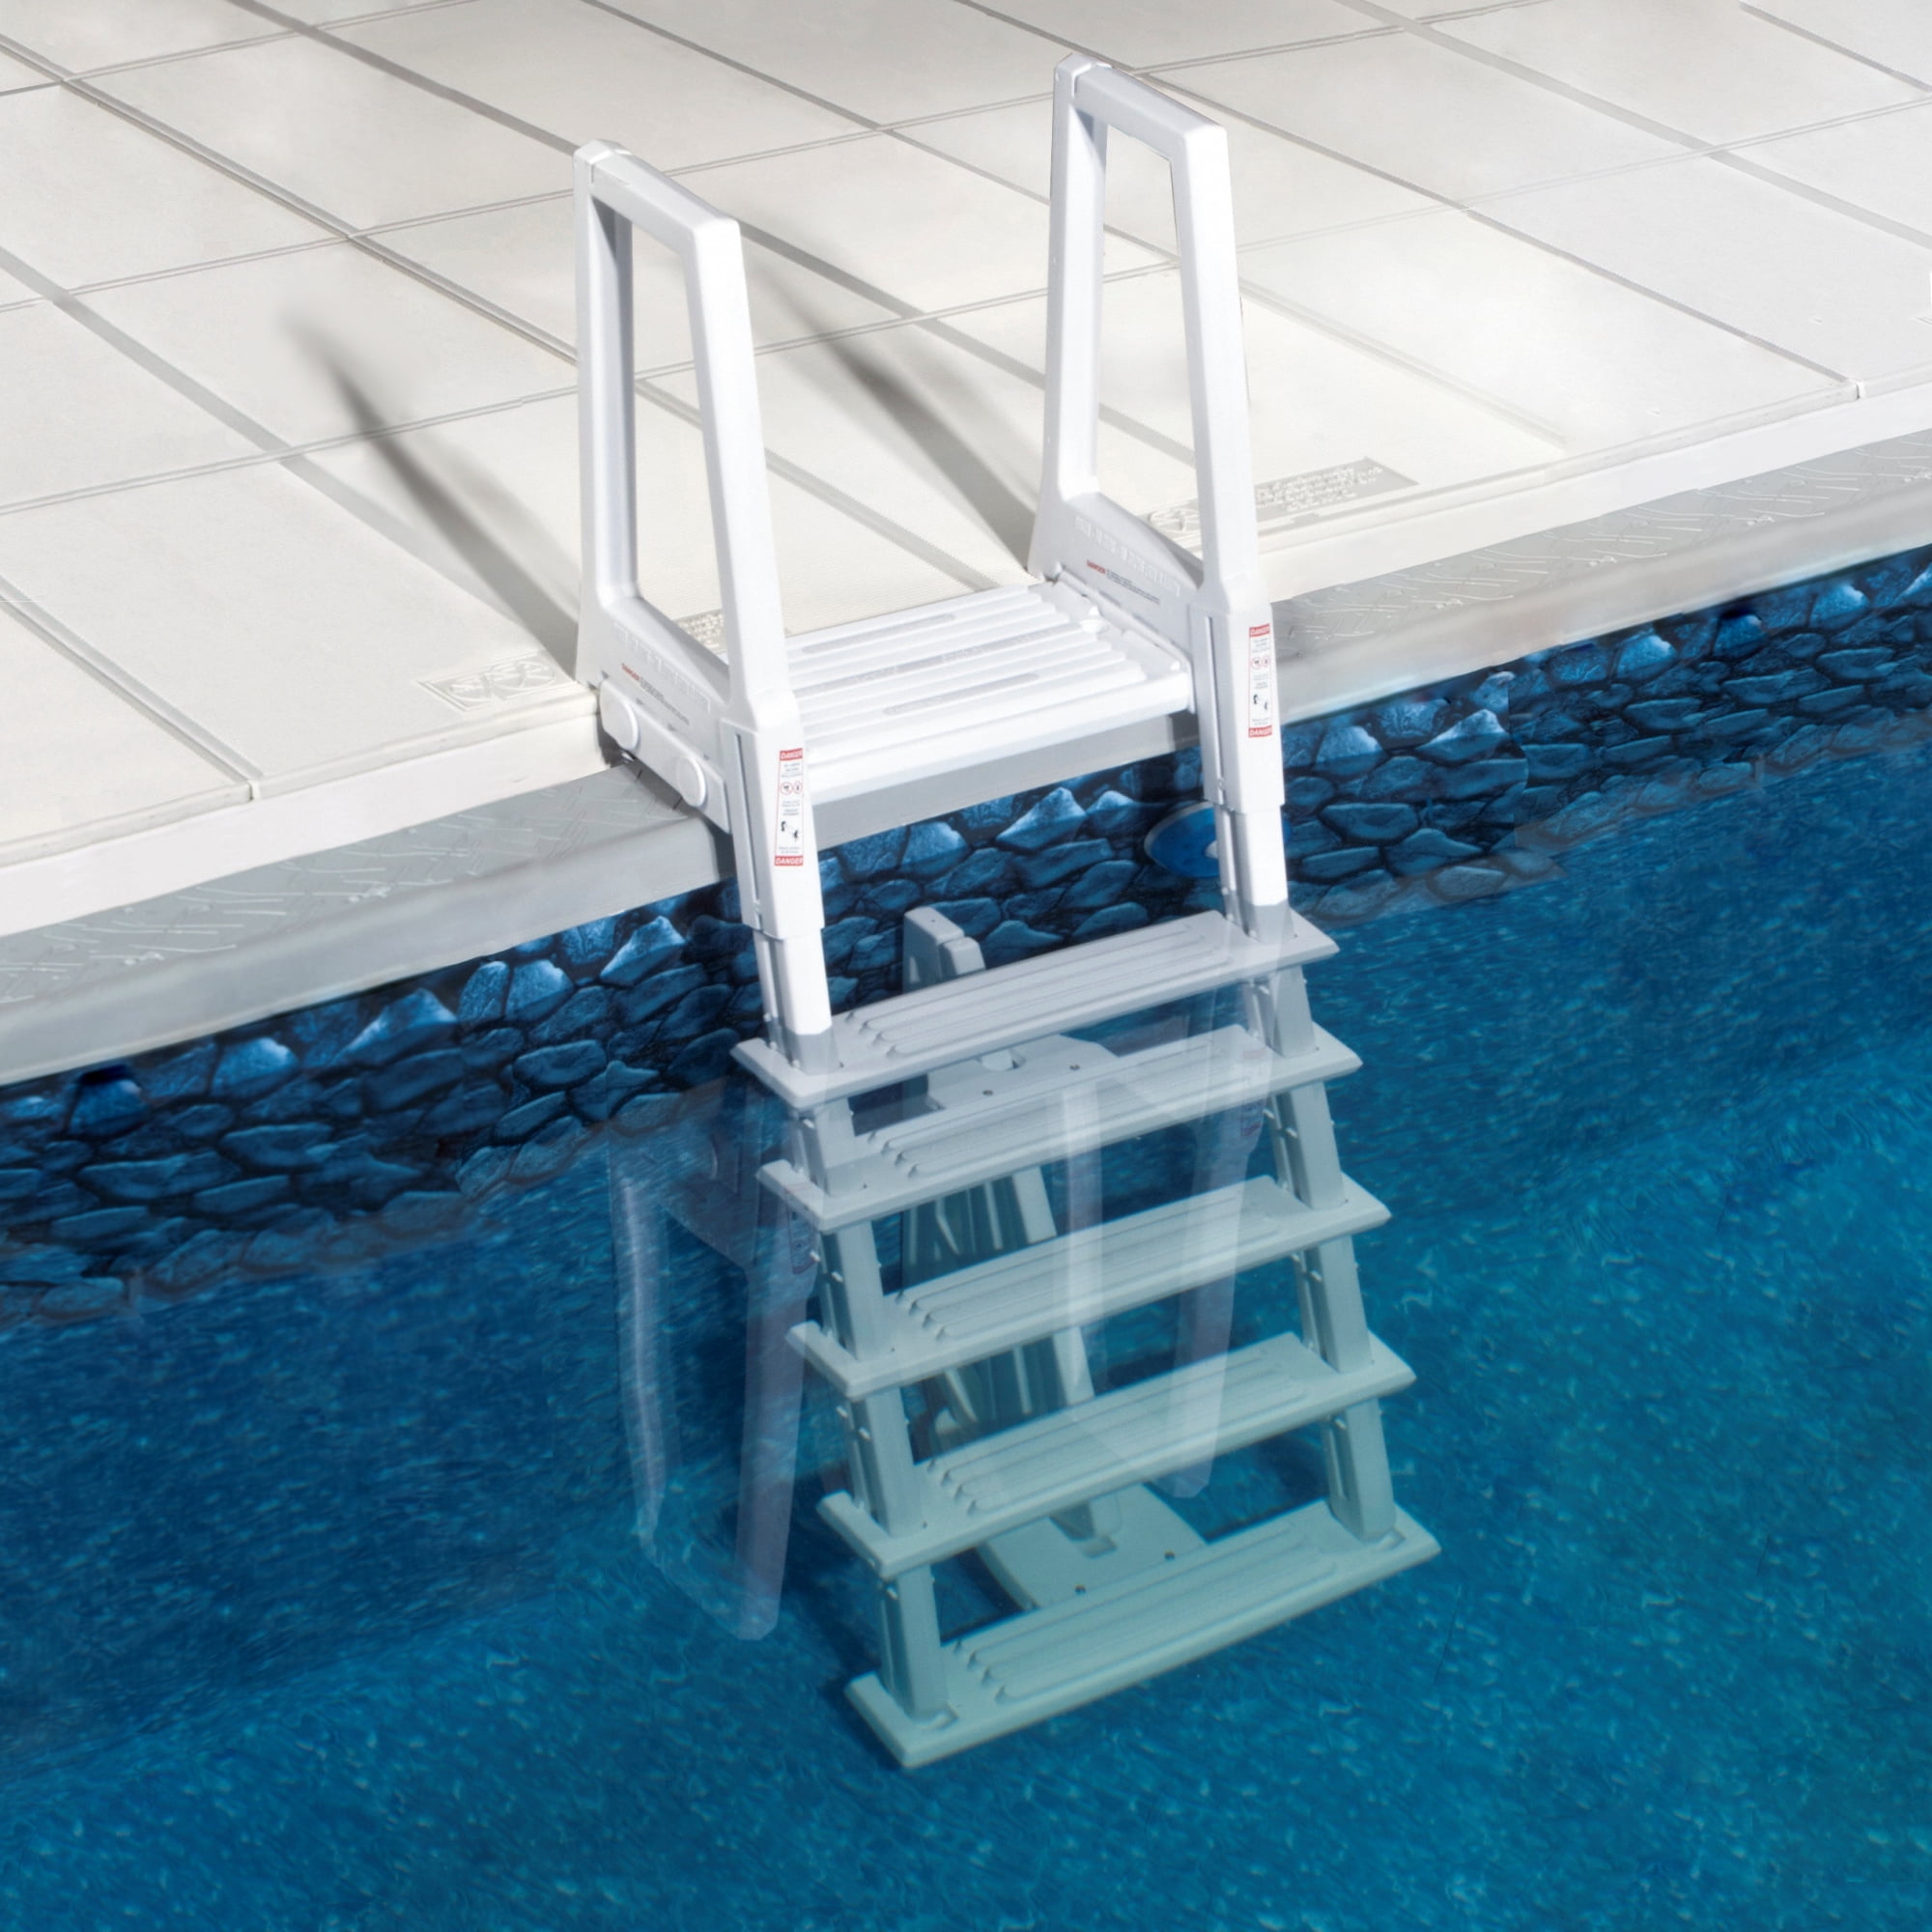 Adjustable Above Ground In-Pool Ladder w/ Non-slip Molded Steps BESTSELLER 